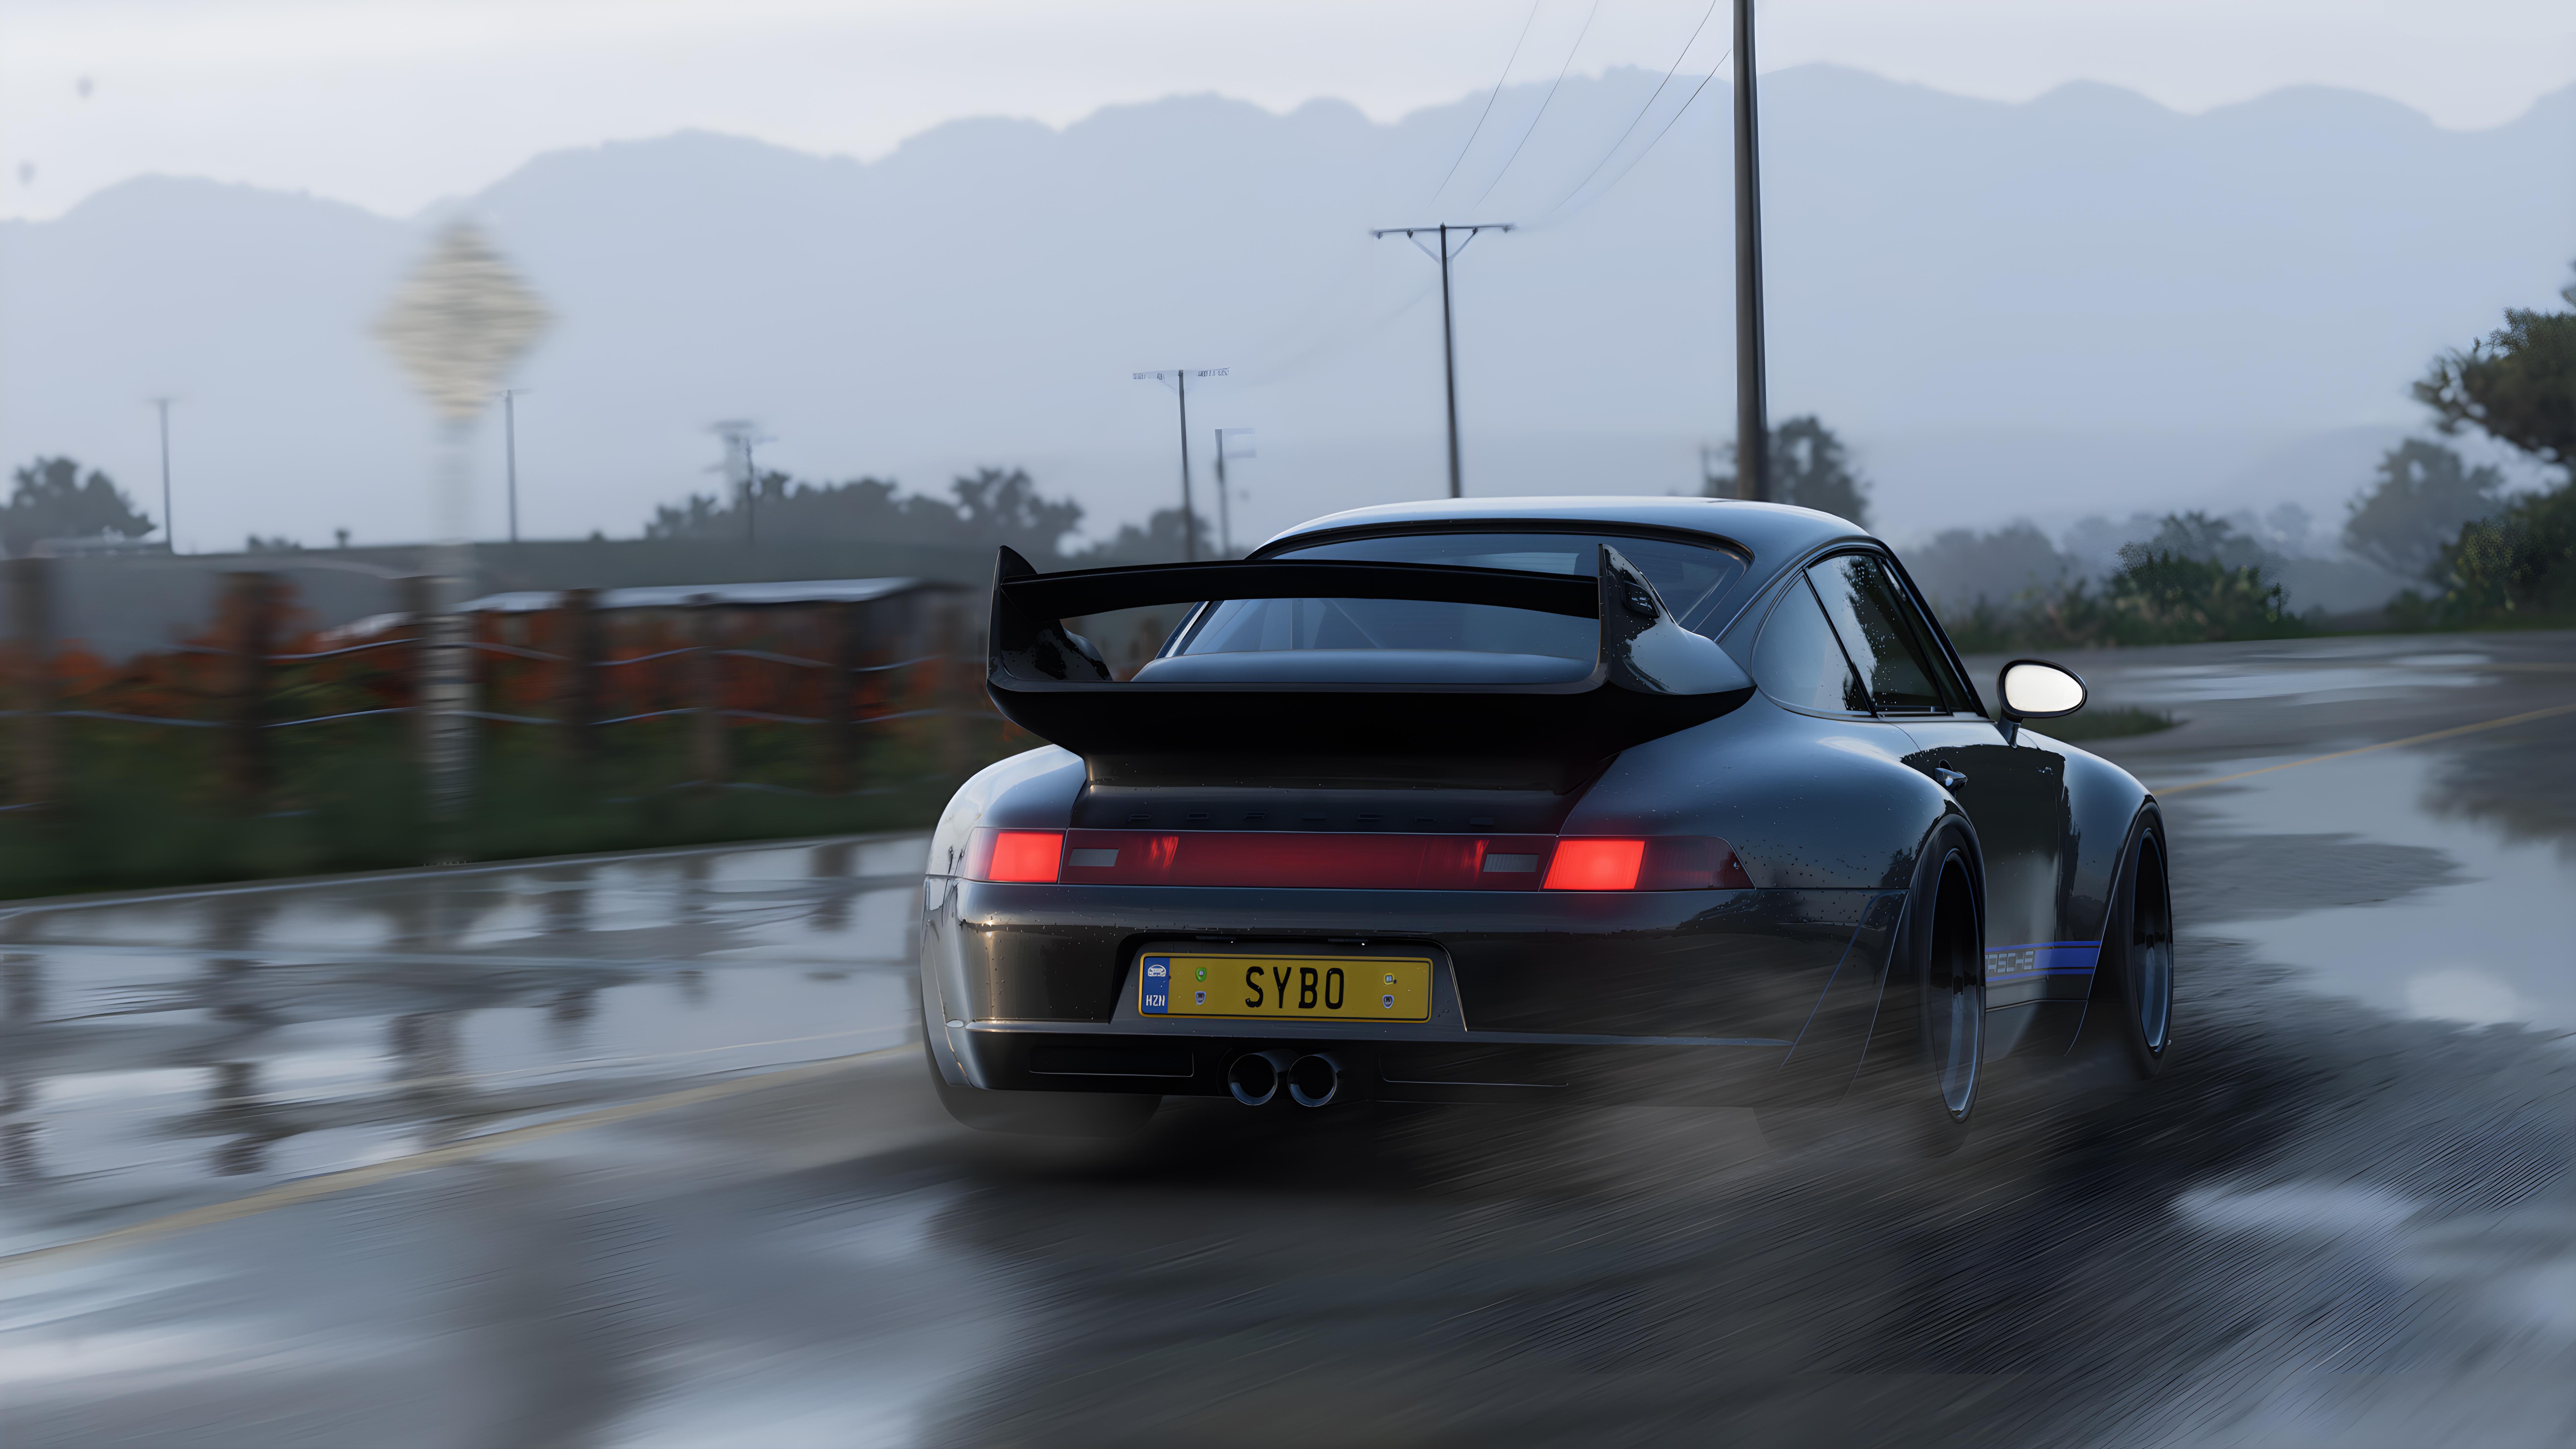 Porsche Hintergrundbild 7680x4320. Porsche 4K wallpaper for your desktop or mobile screen free and easy to download